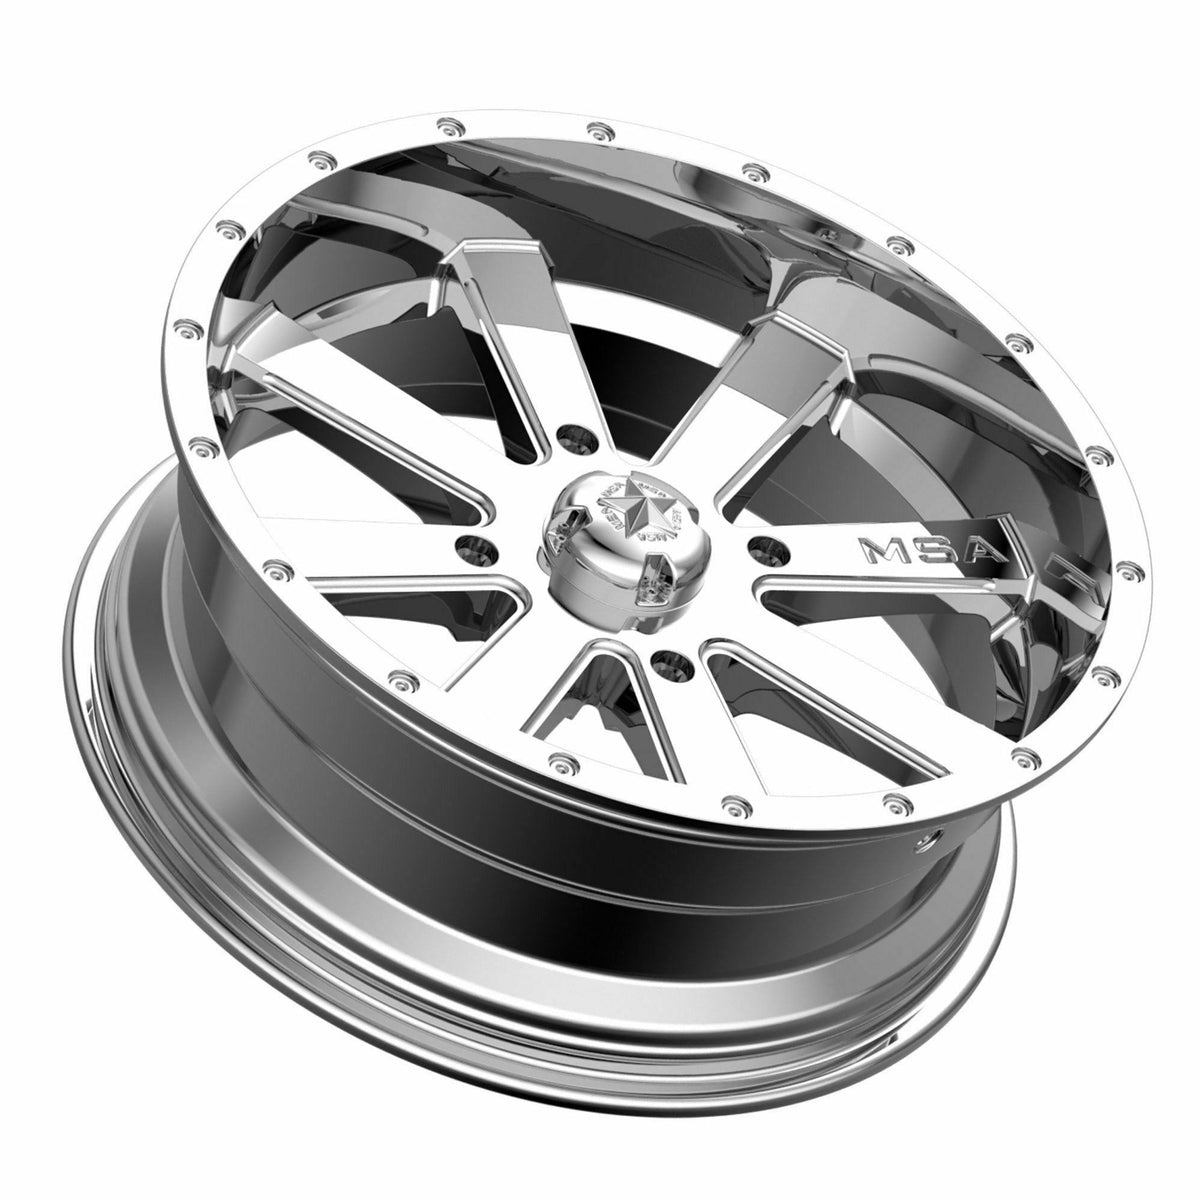 MSA Wheels M34 Flash Wheel (Chrome)